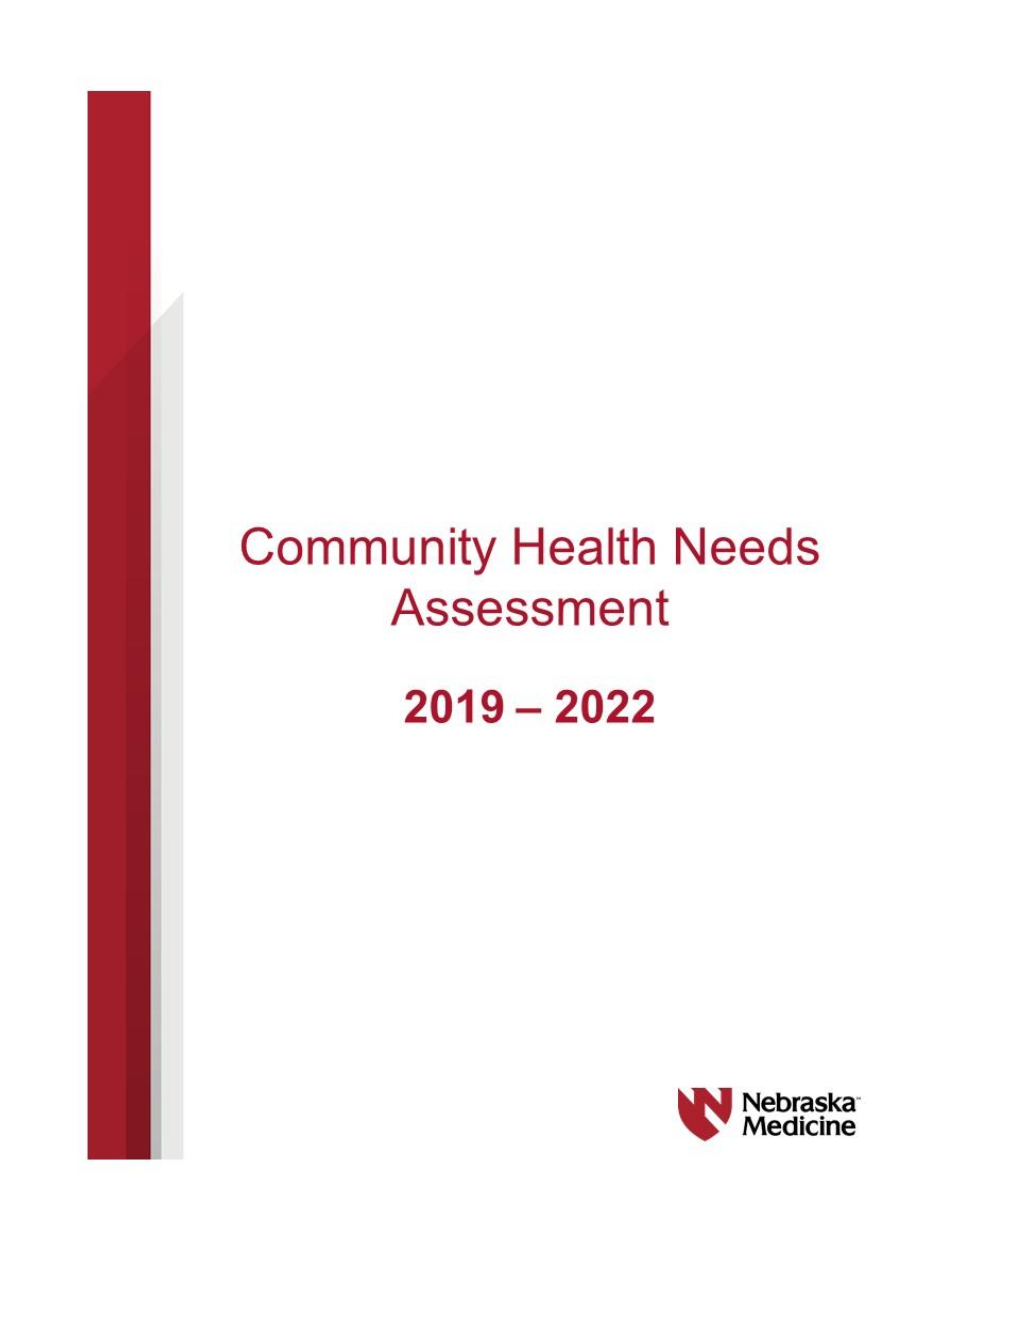 Nebraska Medicine: Community Health Needs Assessment 2019